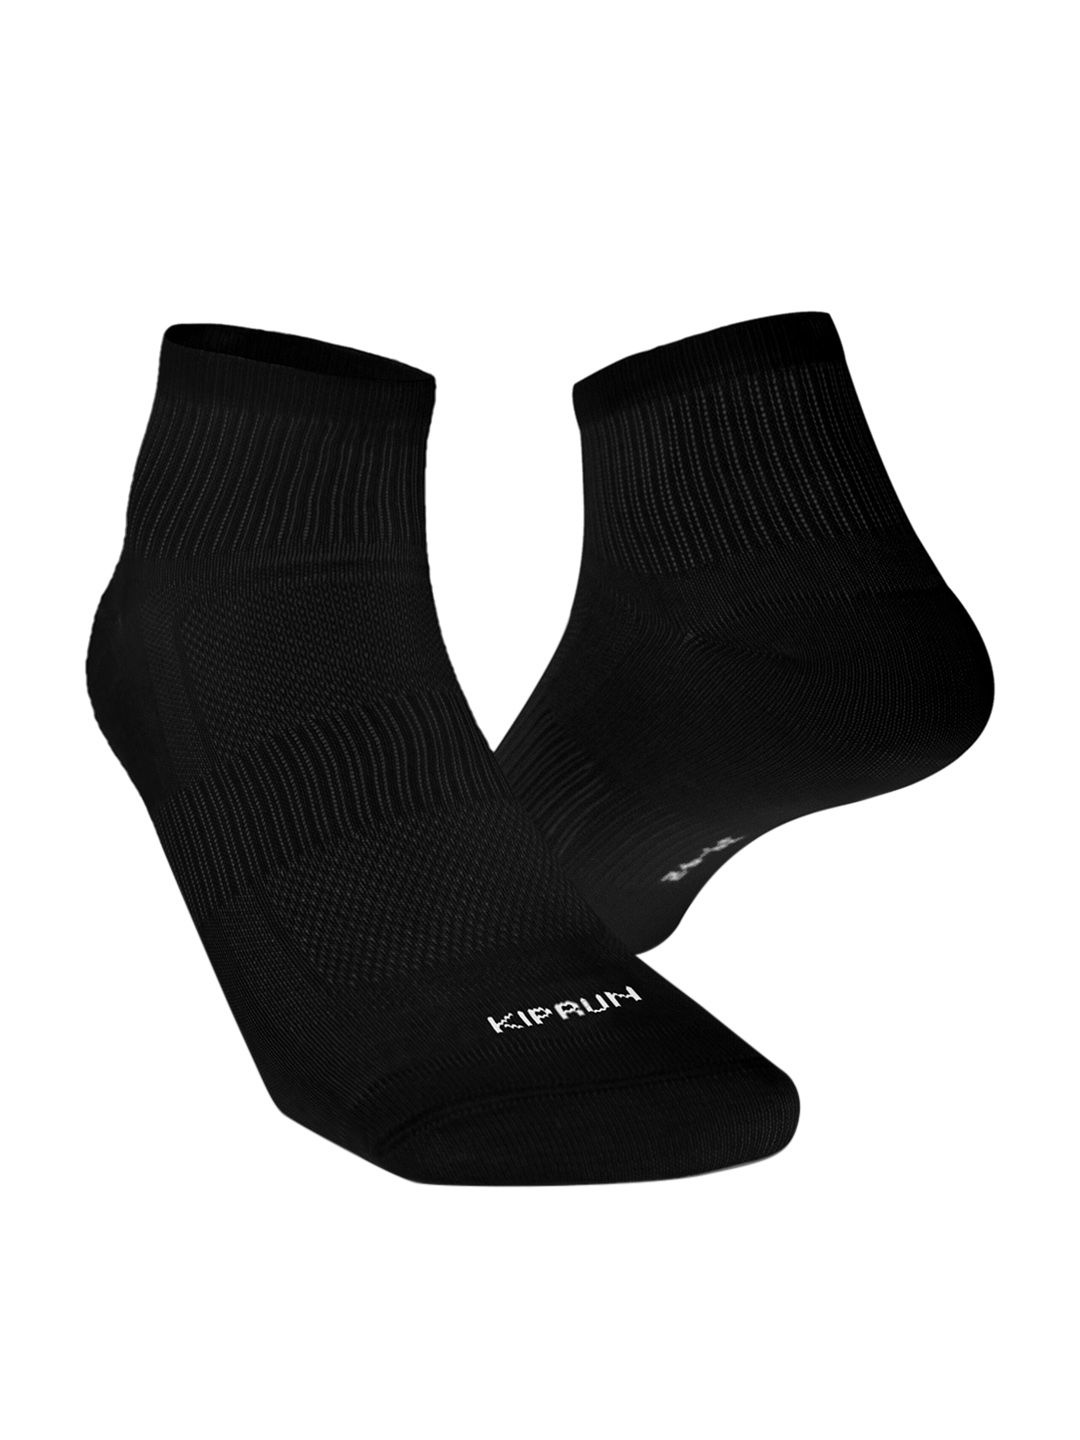 KIPRUN By Decathlon Pack of 3 Solid Black Running Socks Price in India